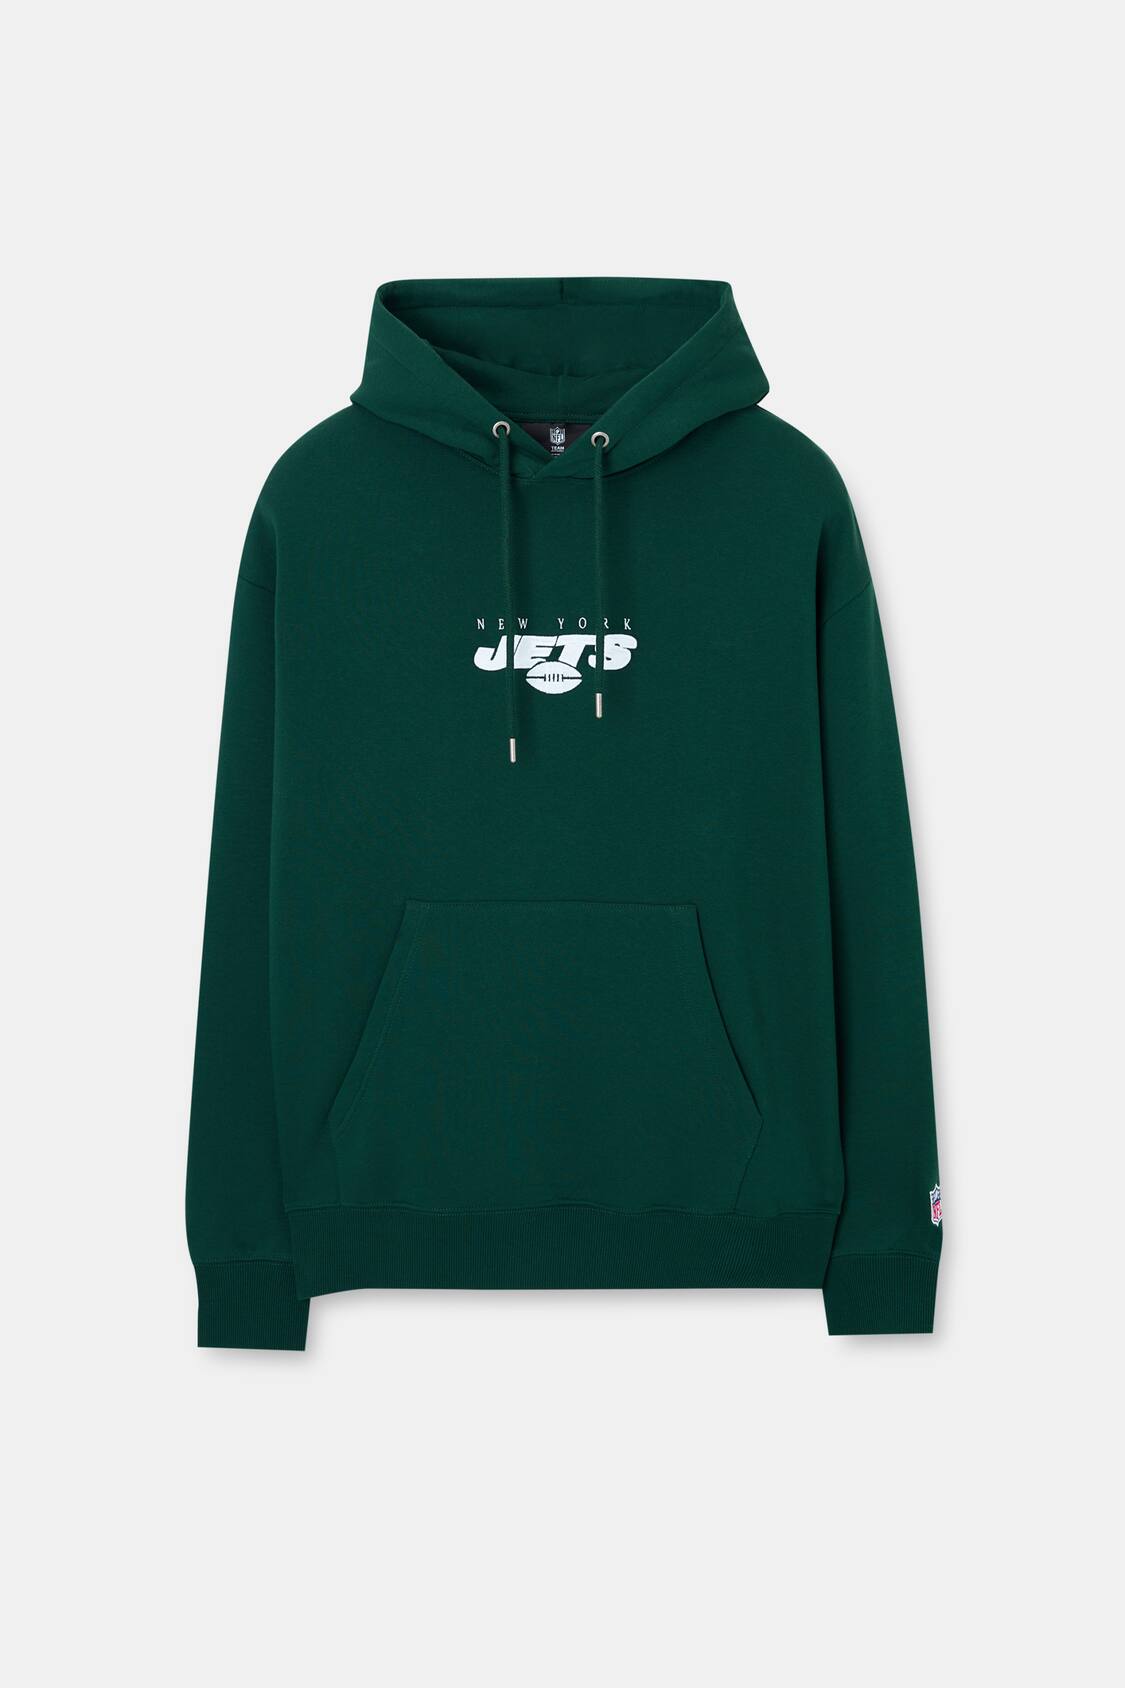 NFL New York Jets hoodie - PULL&BEAR